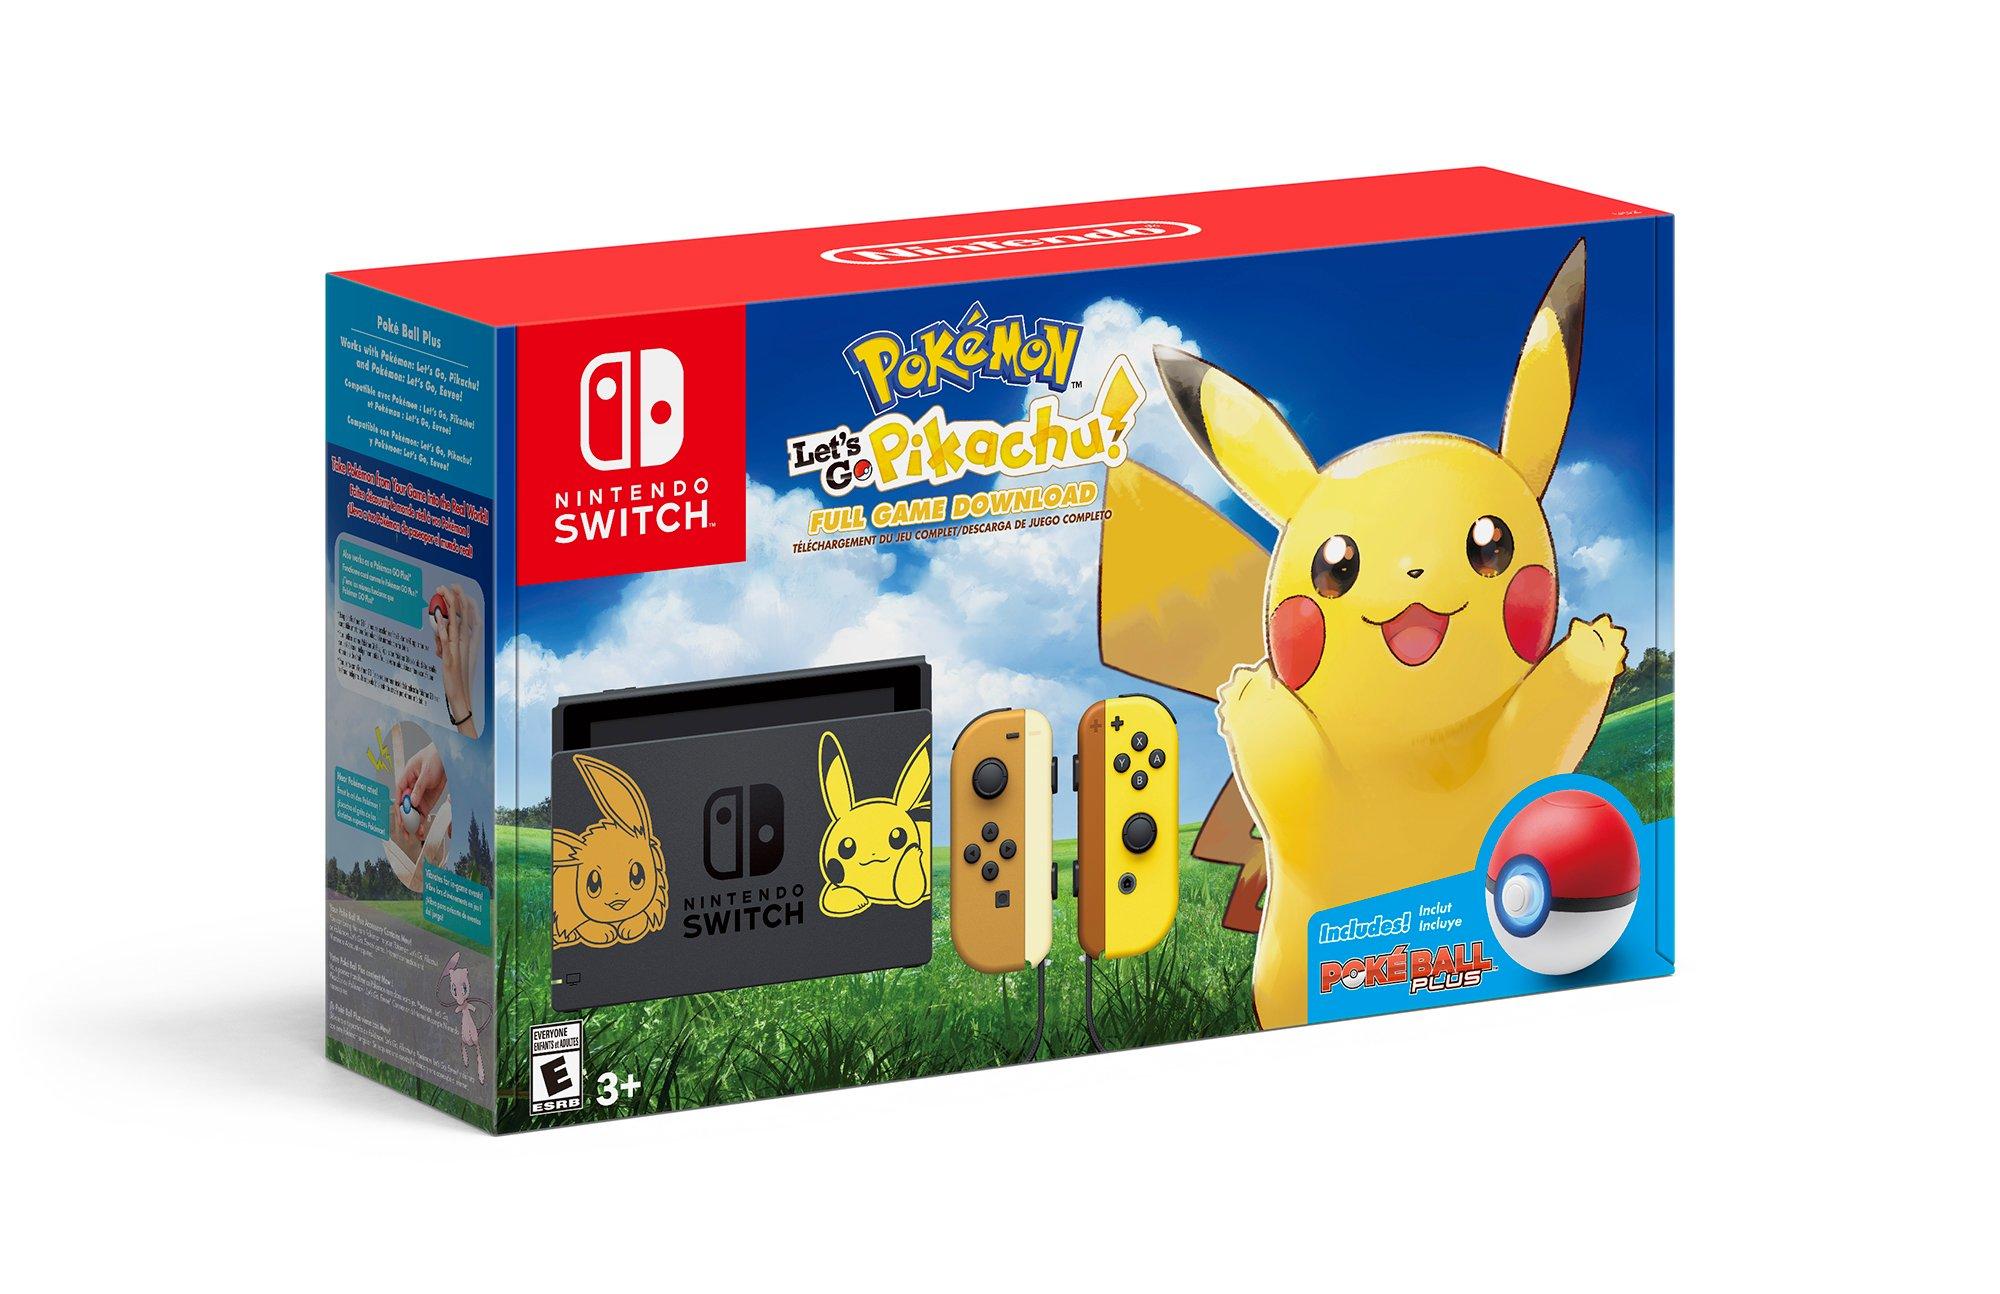 Nintendo Switch Pikachu And Eevee Edition With Pokemon Lets Go Pikachu Bundle Nintendo Switch Gamestop